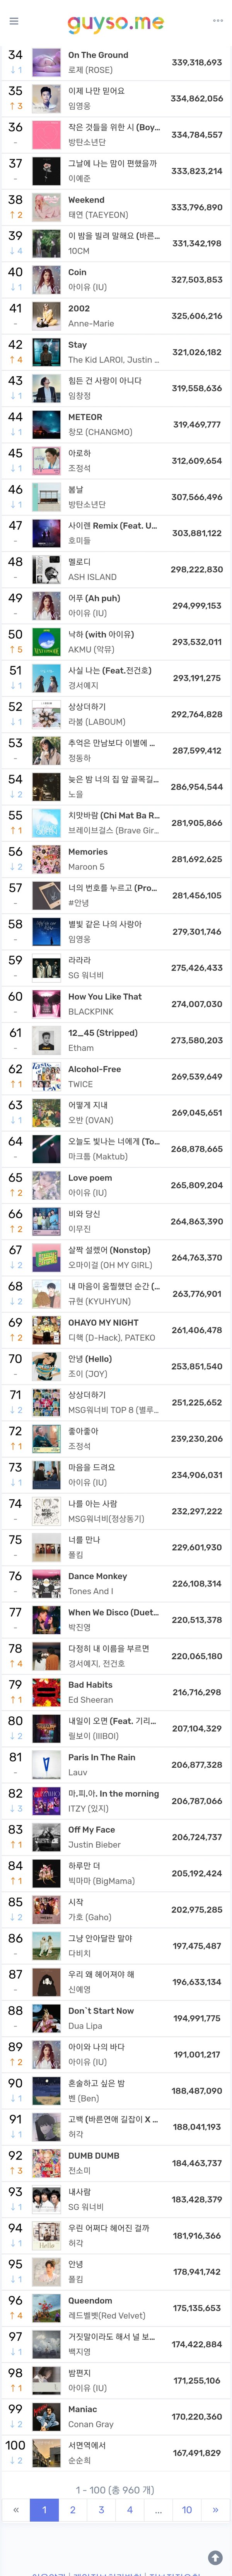 Gaon-Chart-2021